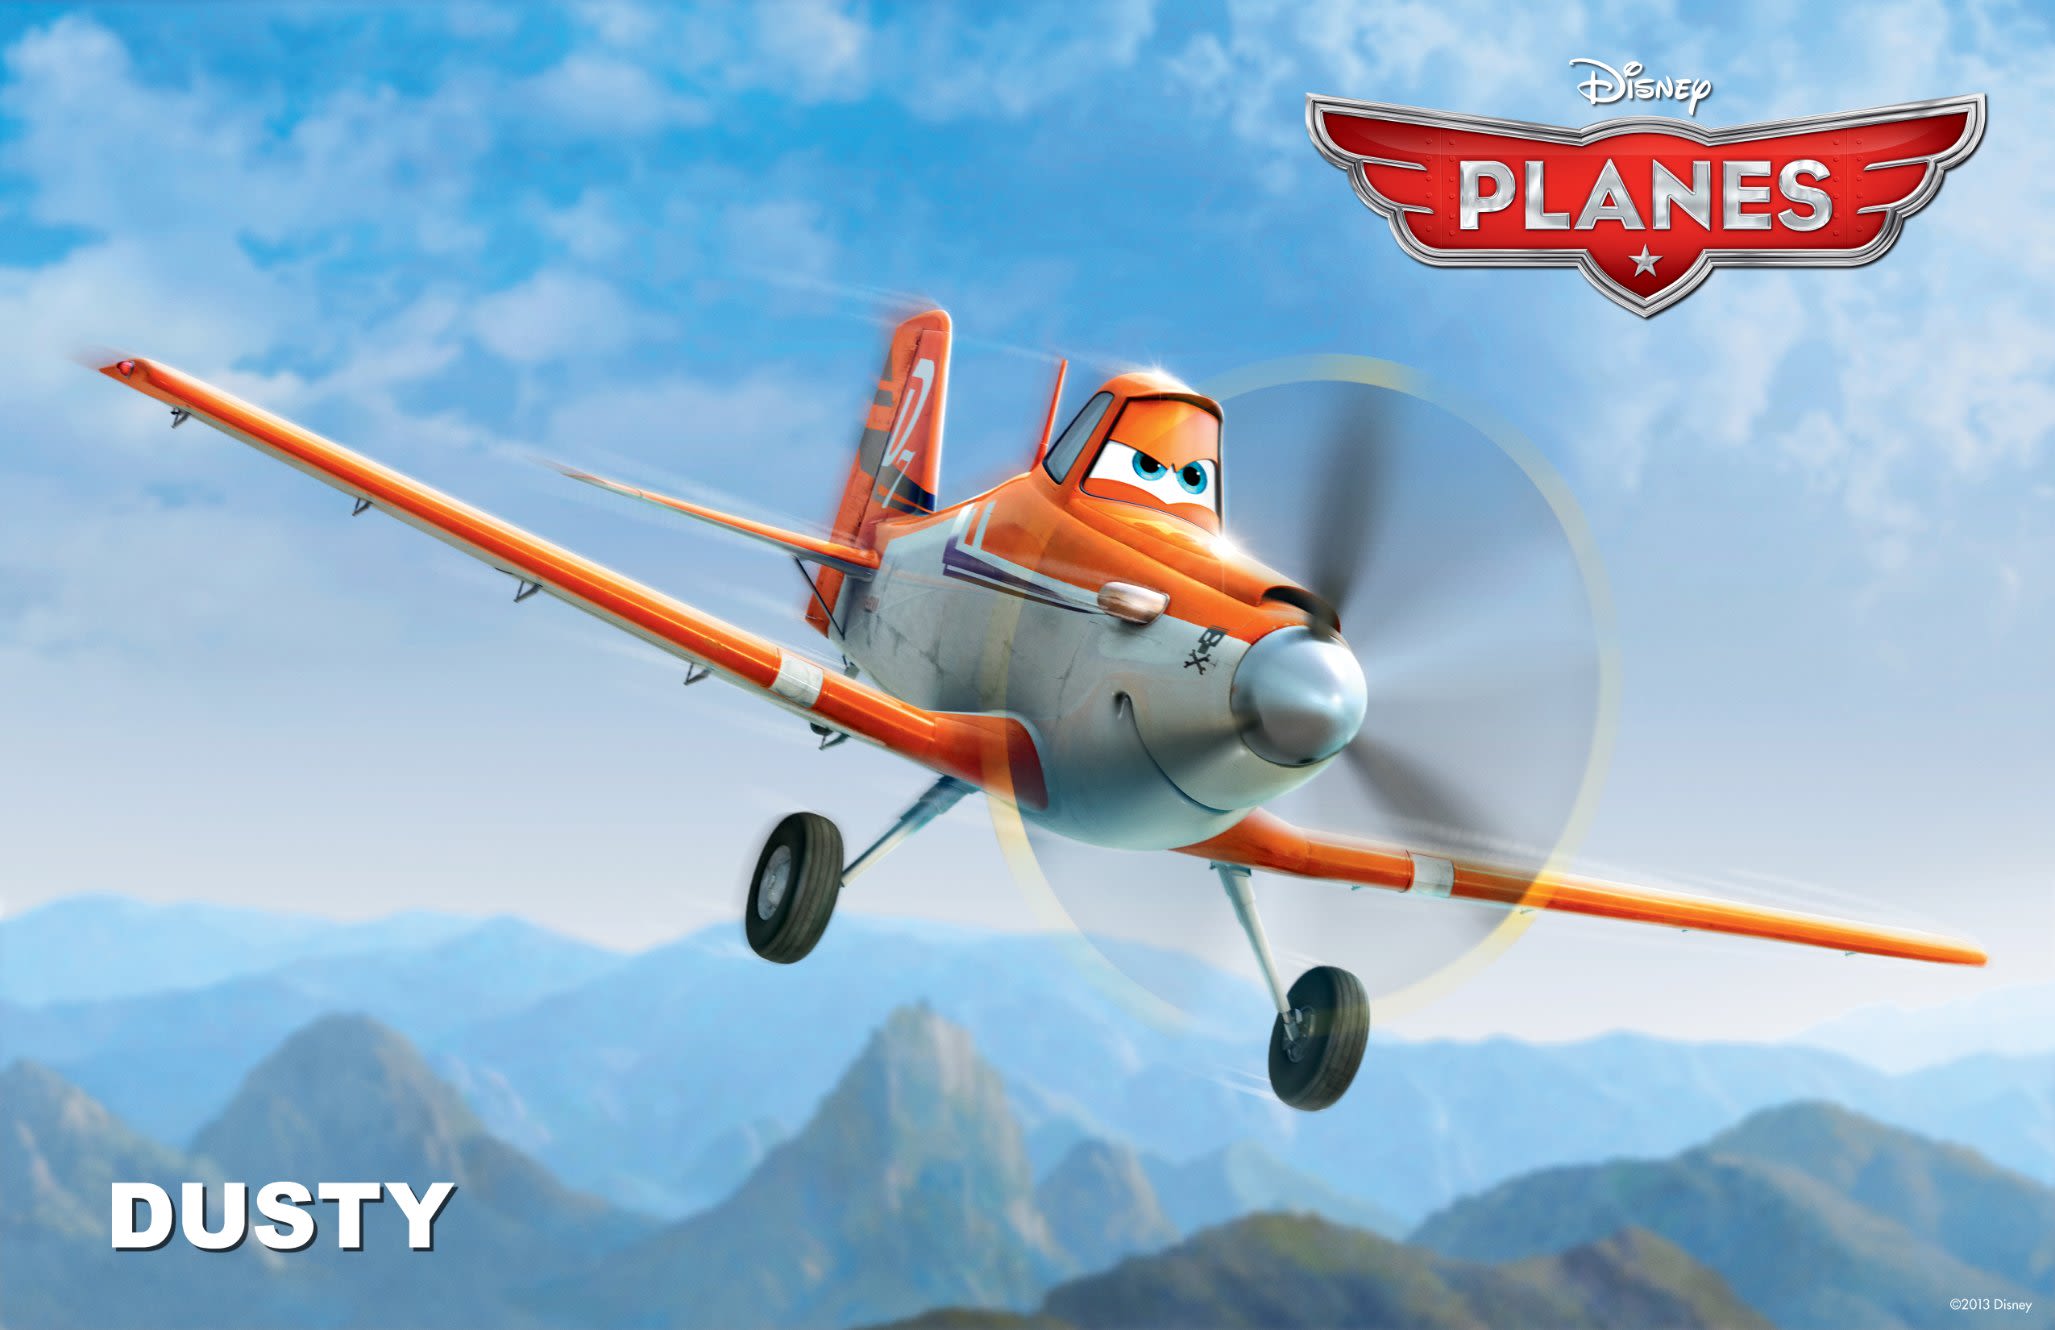 Meet the pilot who kept Disney\'s film right flying | \'Planes\' CNN